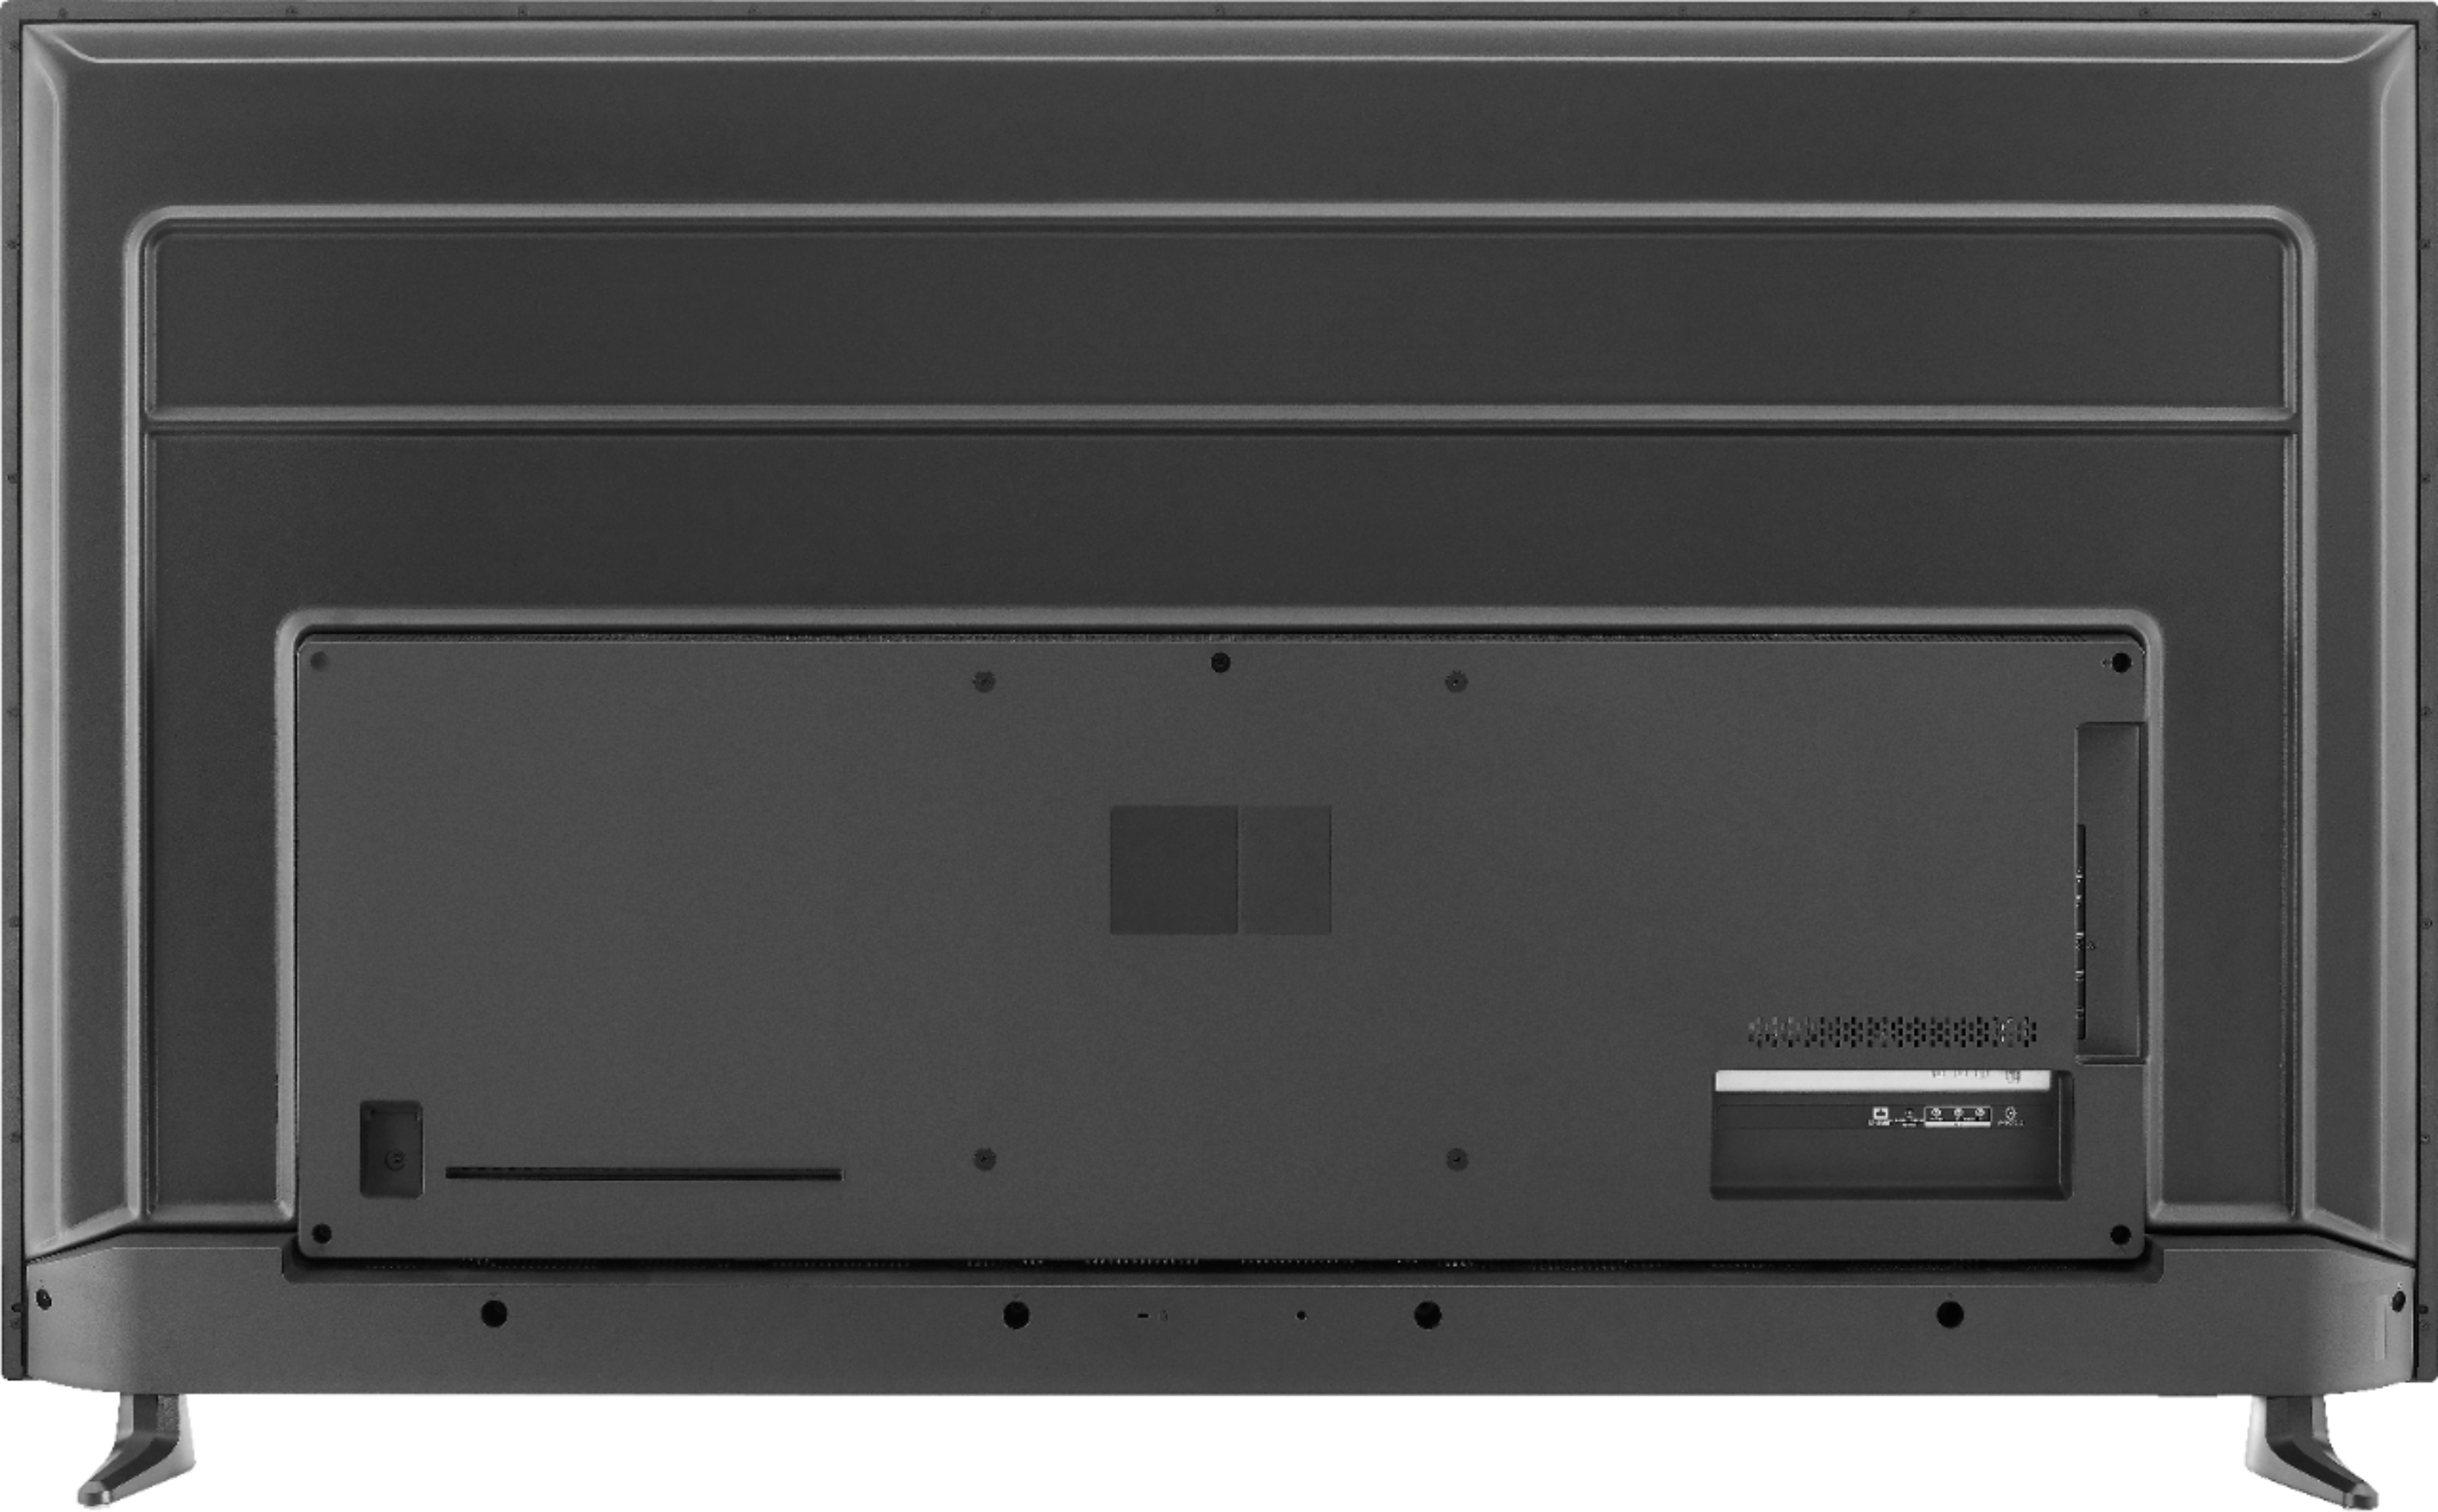 Insignia™ 55 Class F30 Series LED 4K UHD Smart Fire TV NS-55F301NA22 -  Best Buy